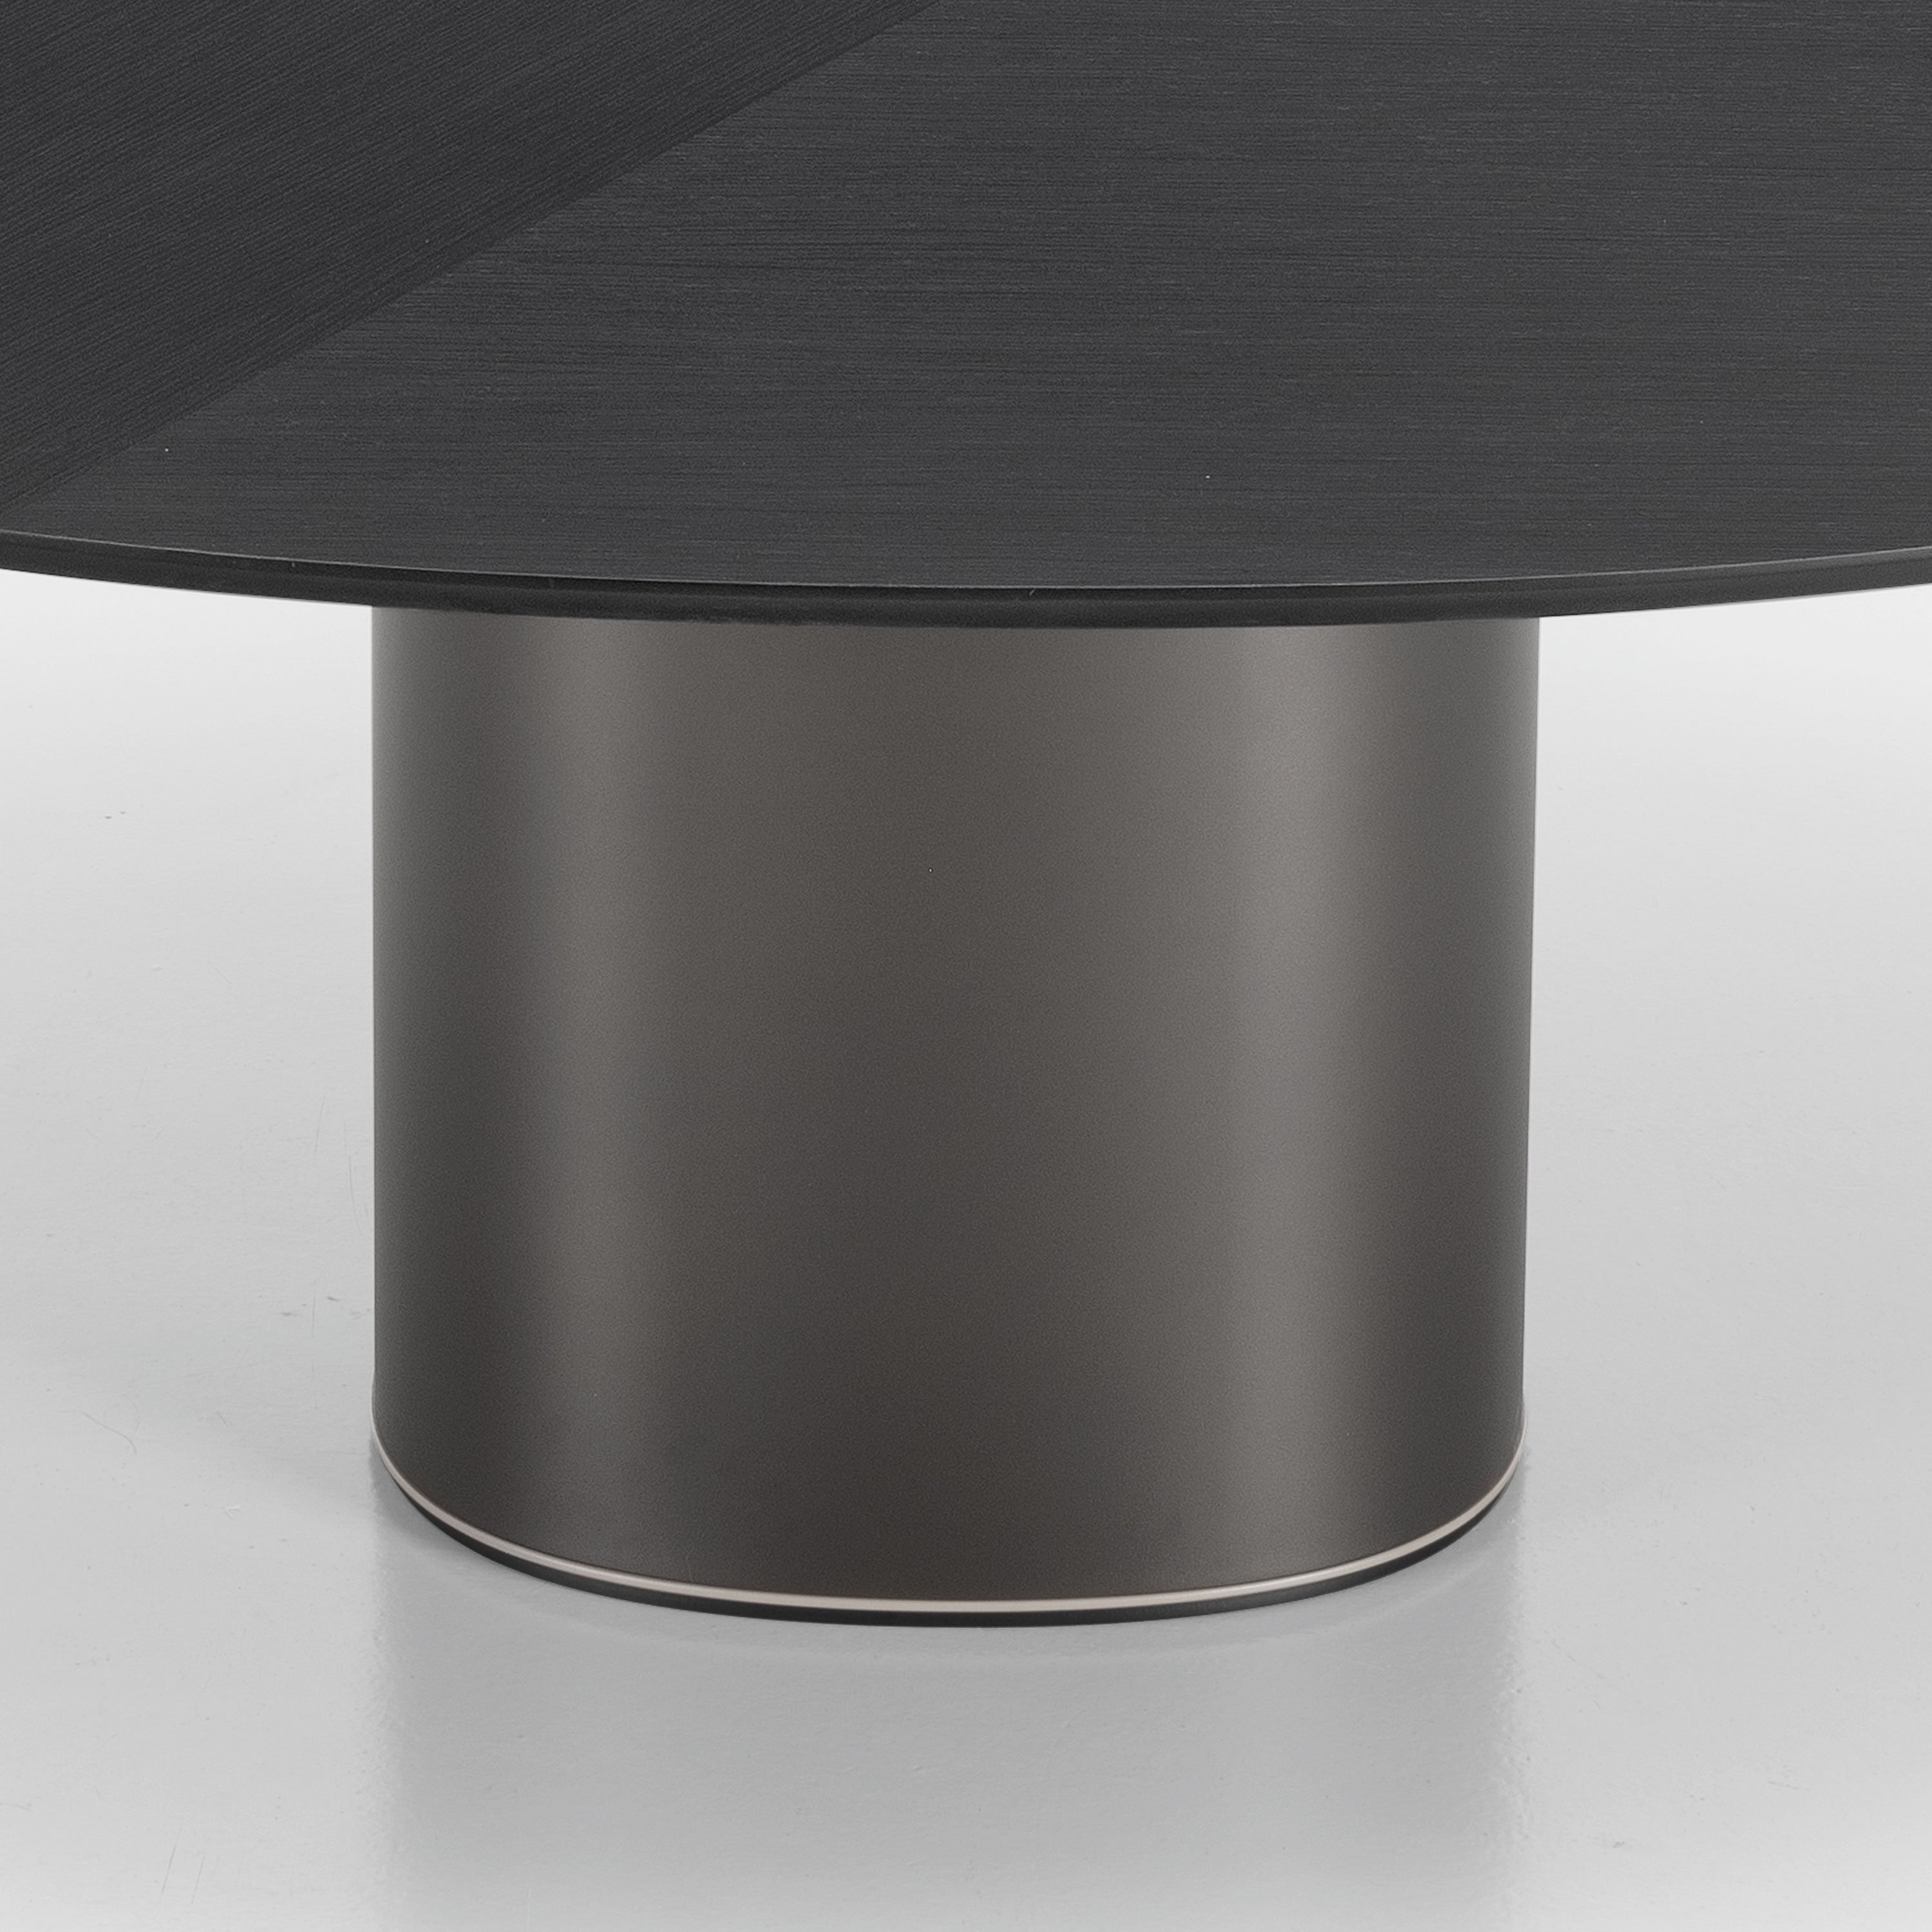 Holo Pillar Dining Table from Kristalia, designed by Kensaku Oshiro